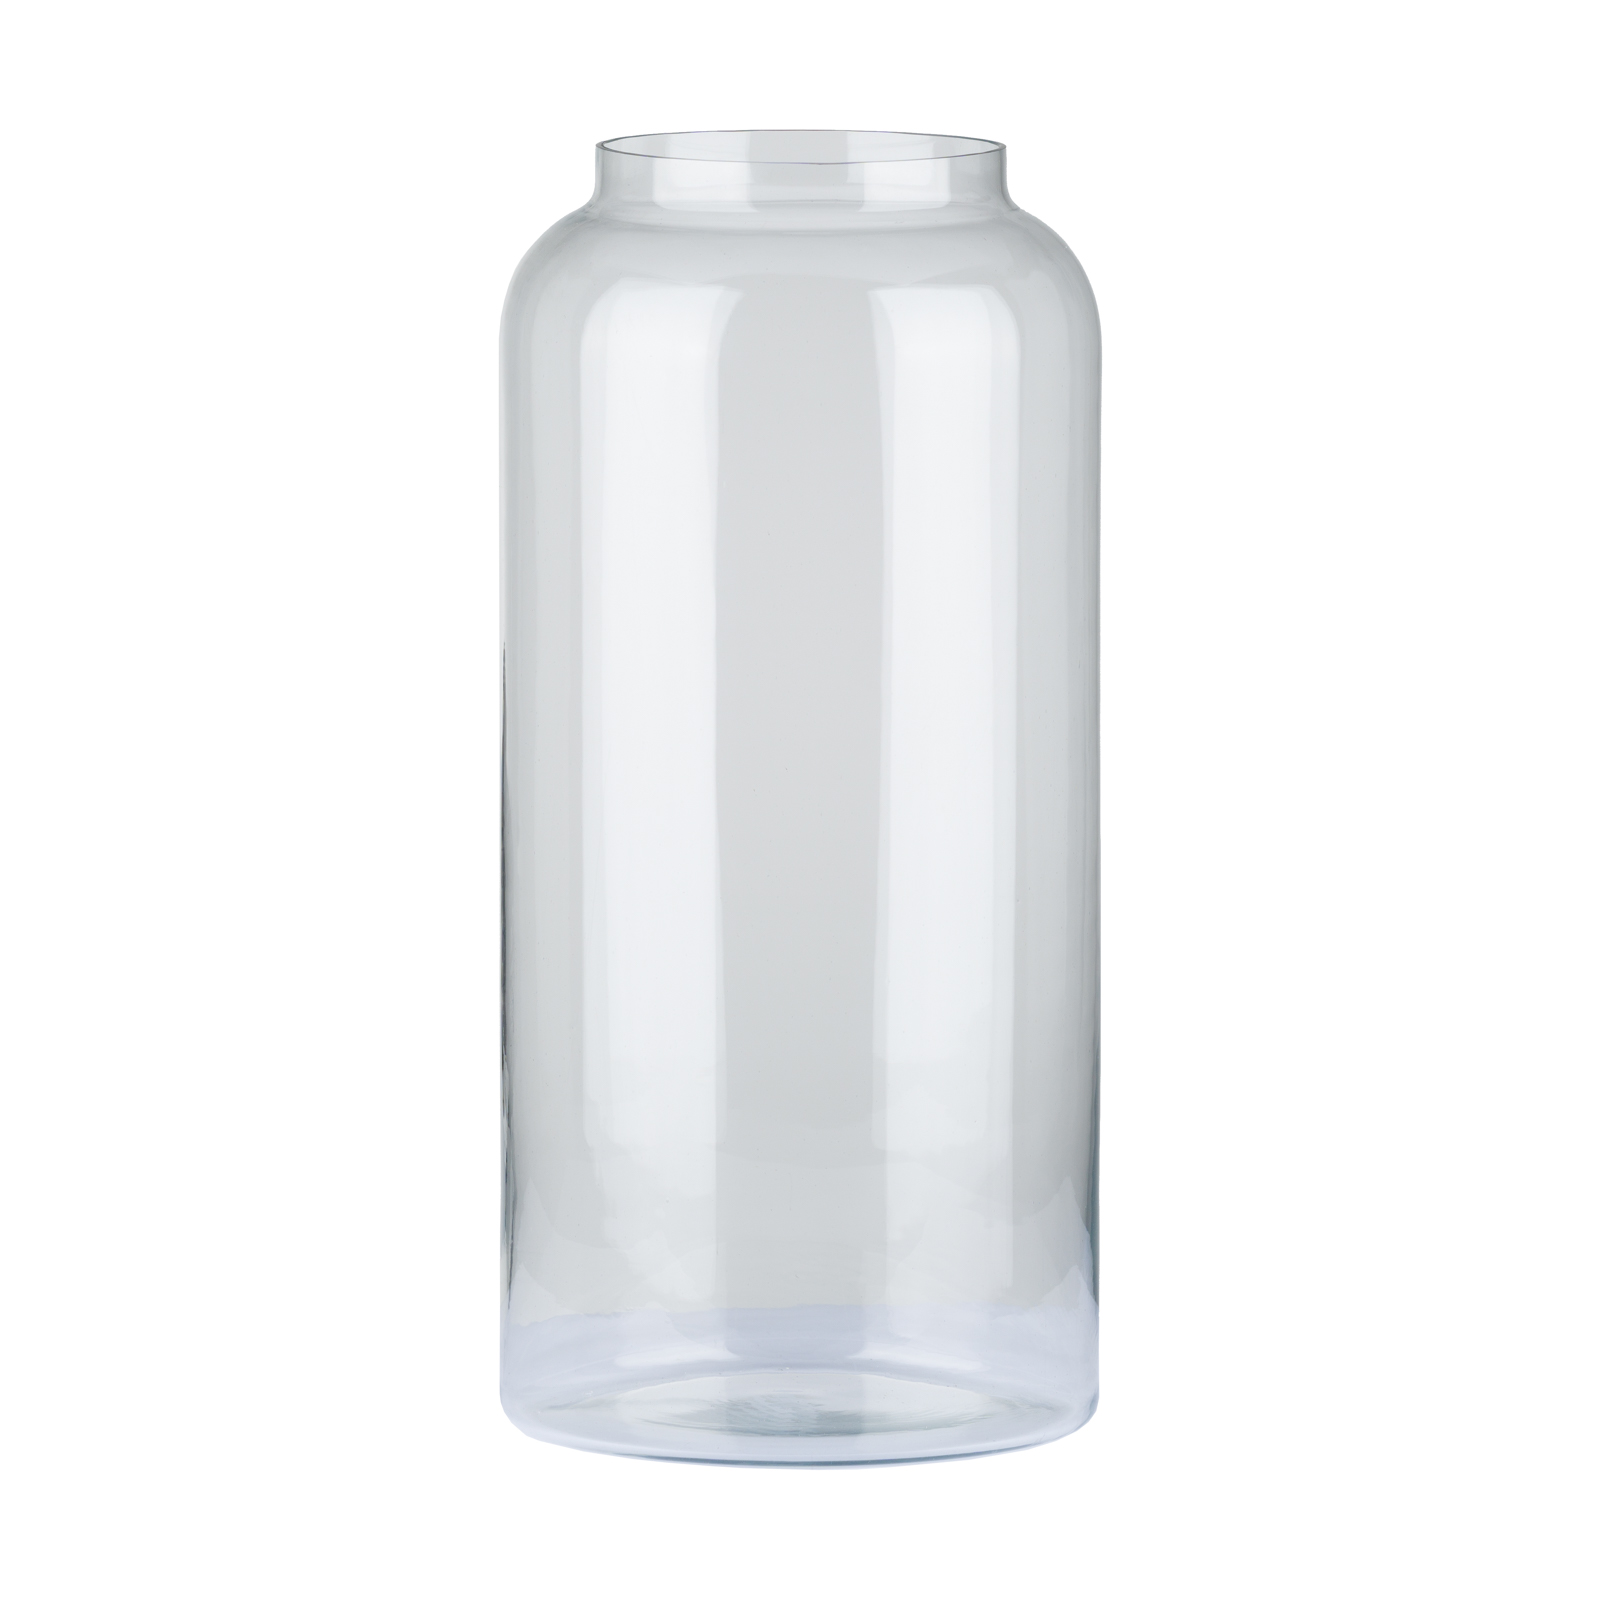 Large Apothecary Jar - Image 1